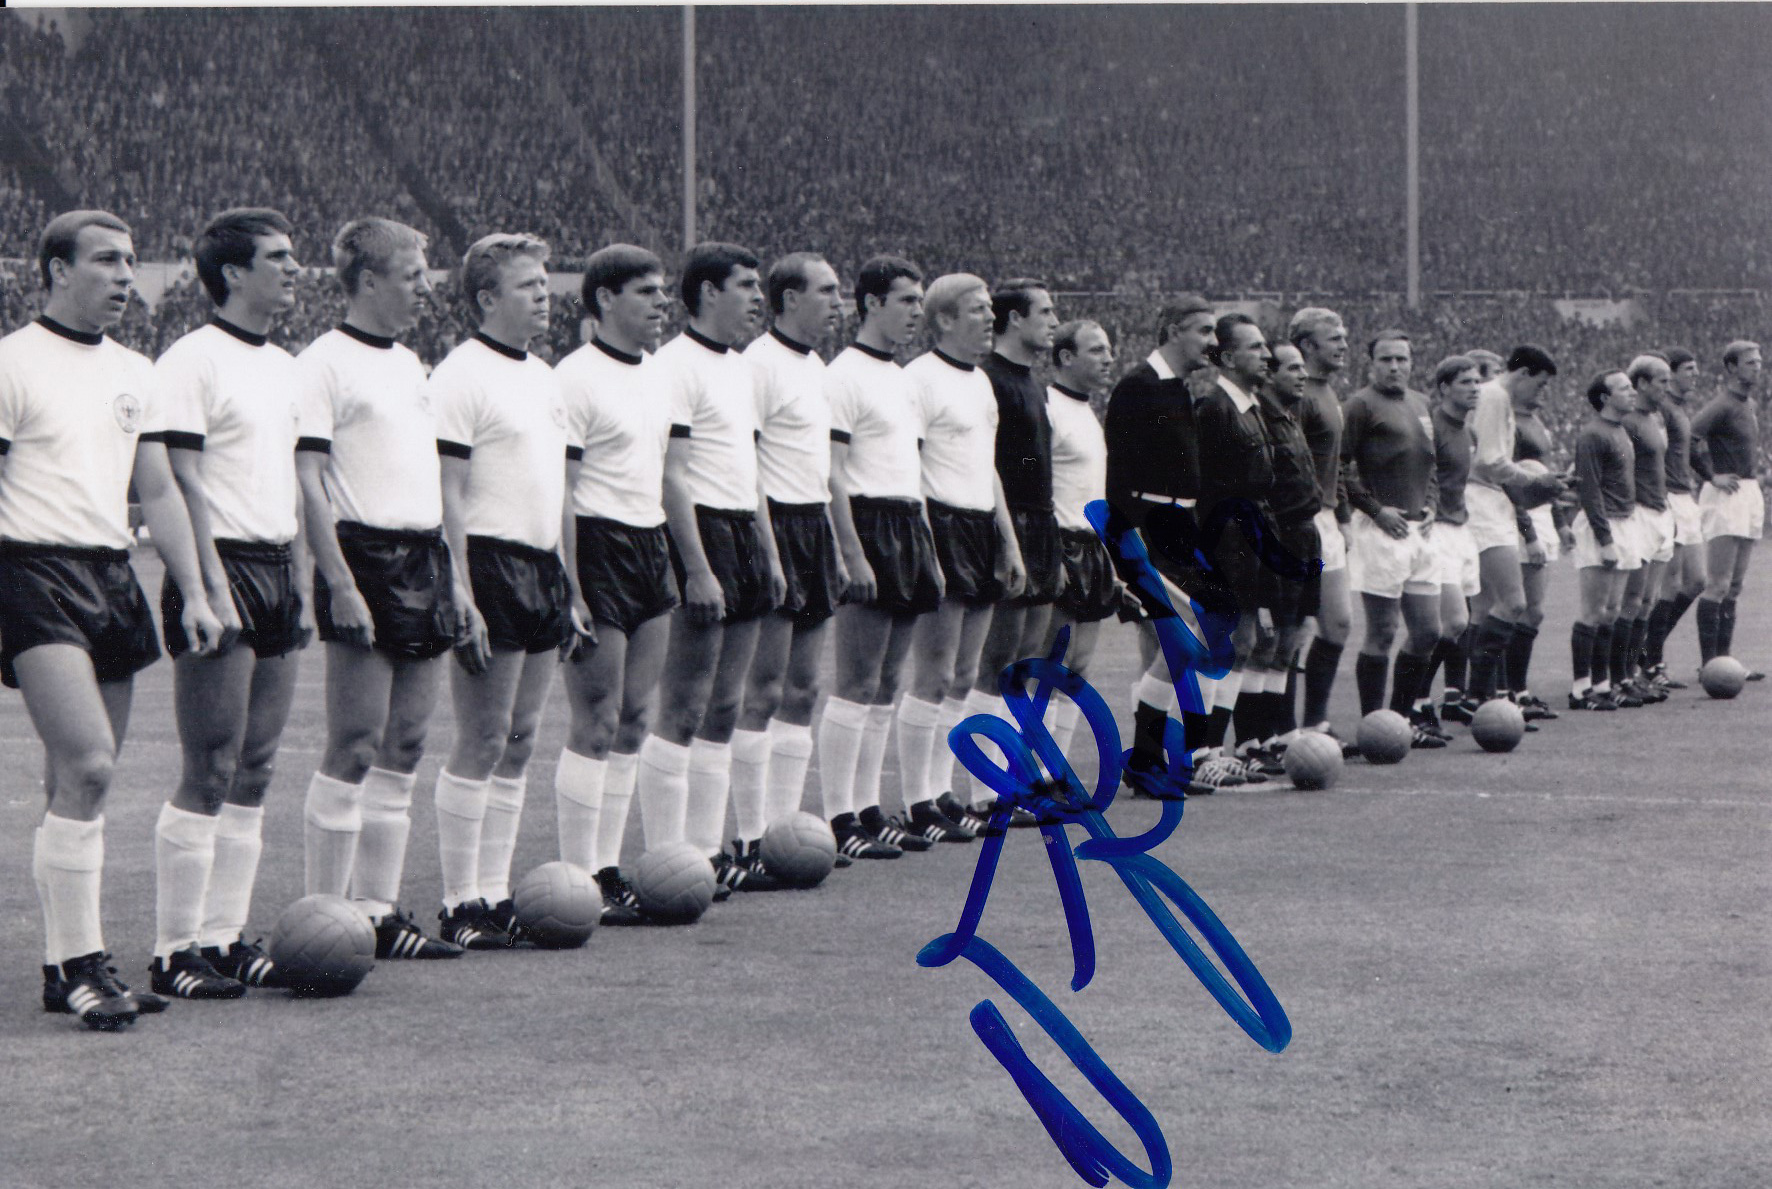 UWE SEELER 1966: Autographed 6 x 4 photo, depicting the West German team standing shoulder to